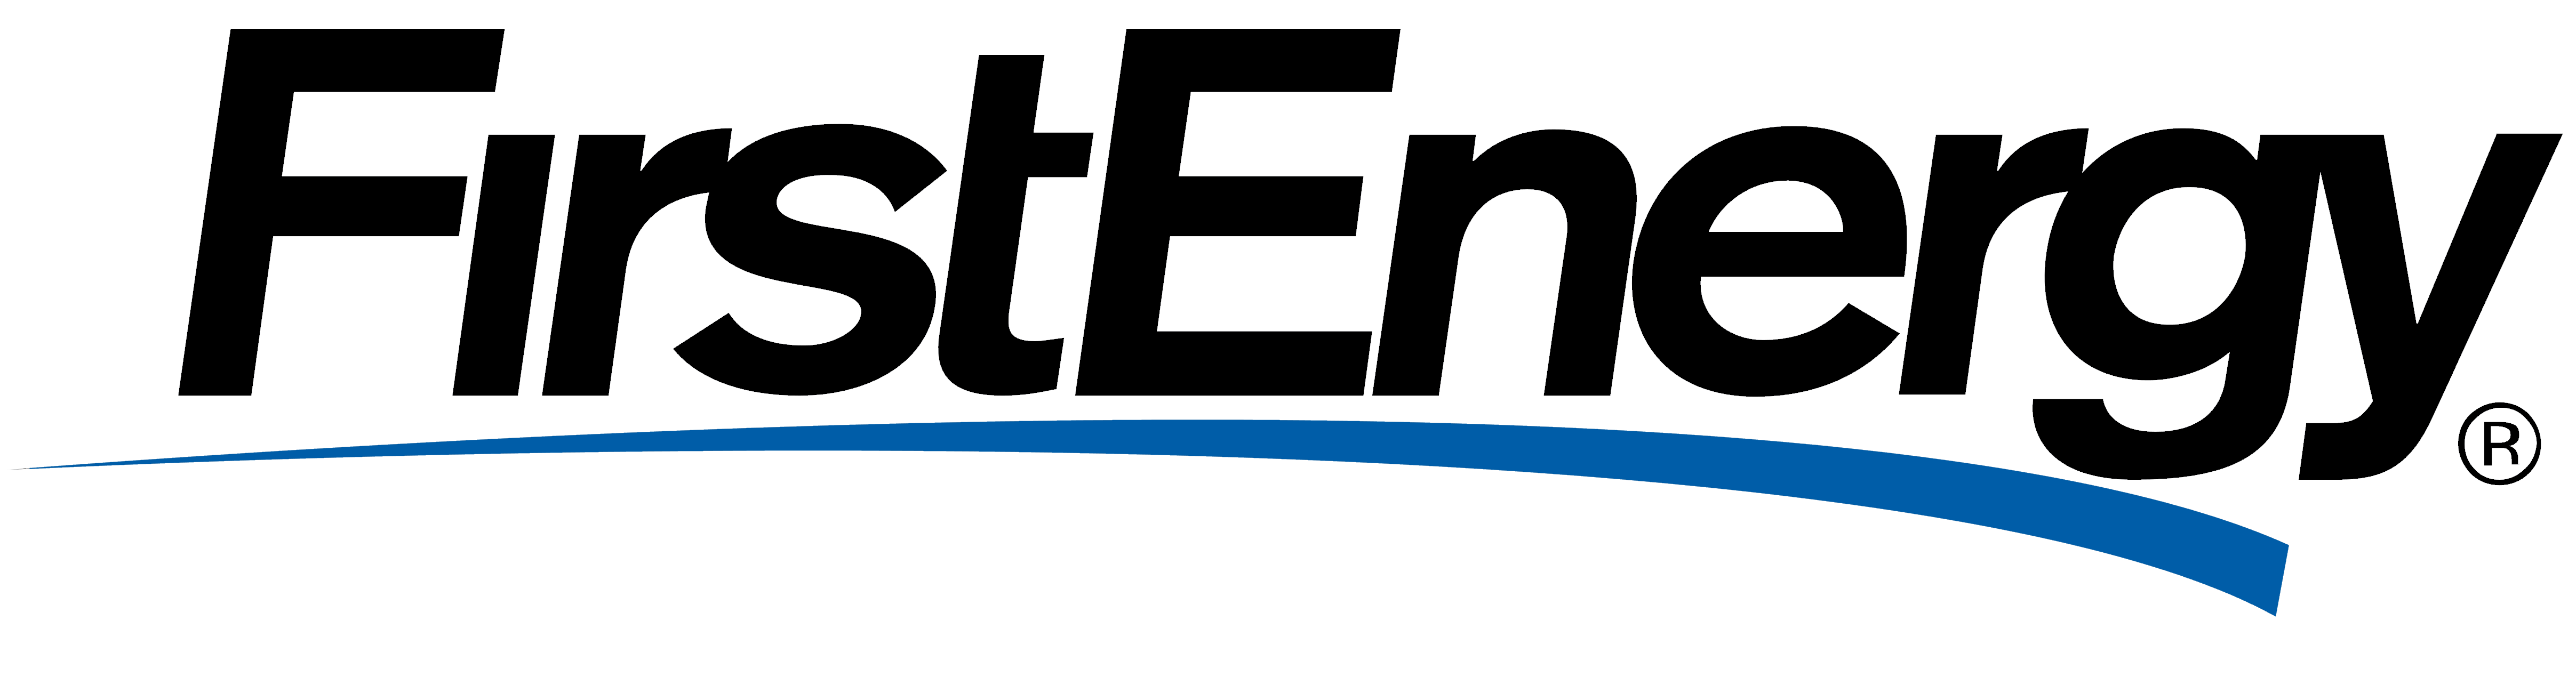 FirstEnergy (First Energy) logo, logotype